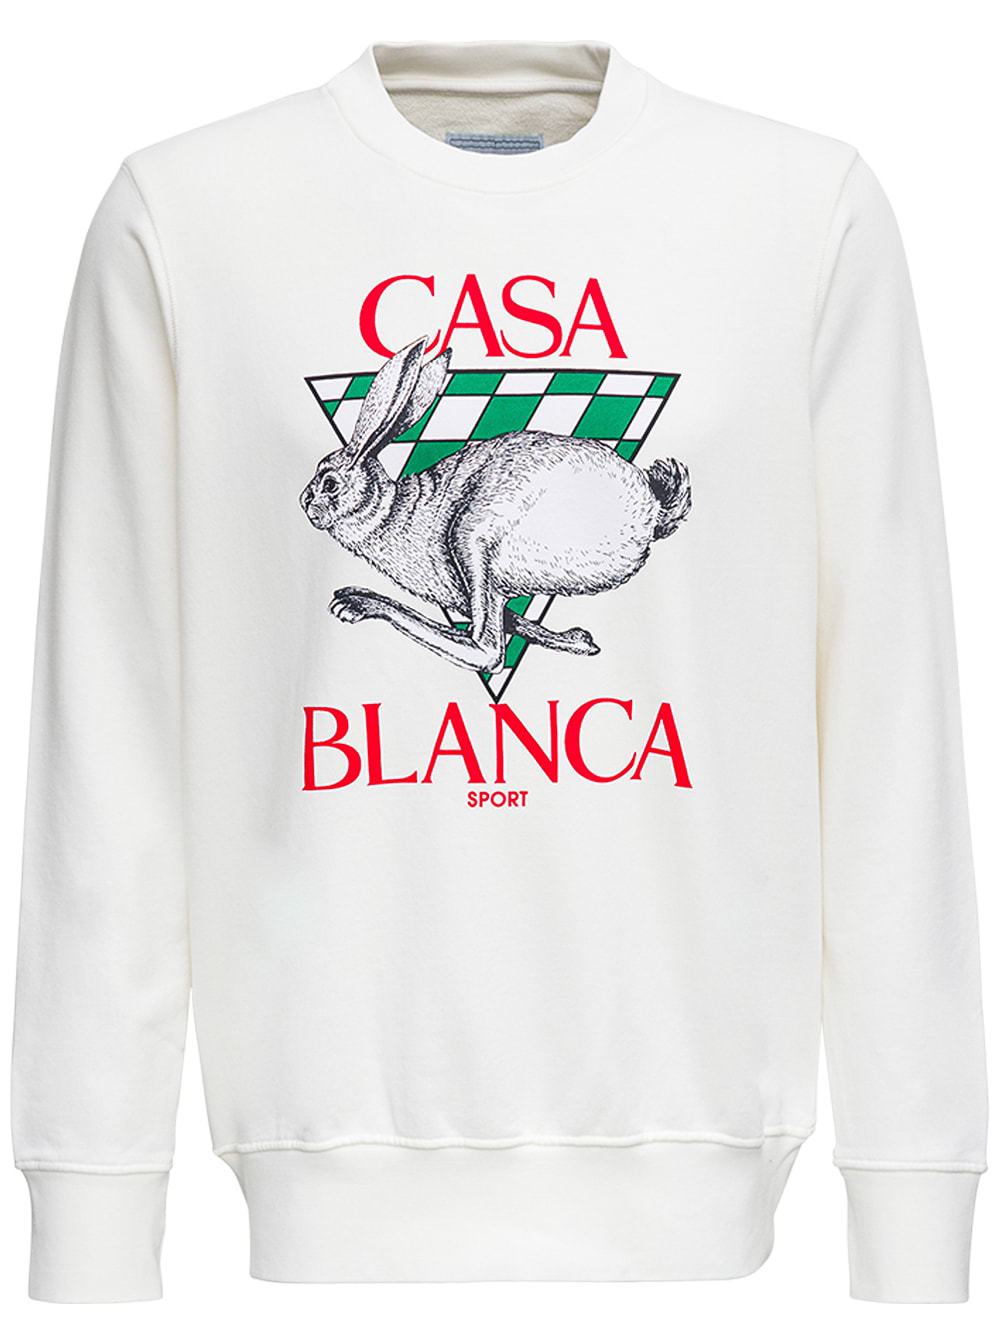 Casablanca White Cotton Sweatshirt With Casa Blanca Print